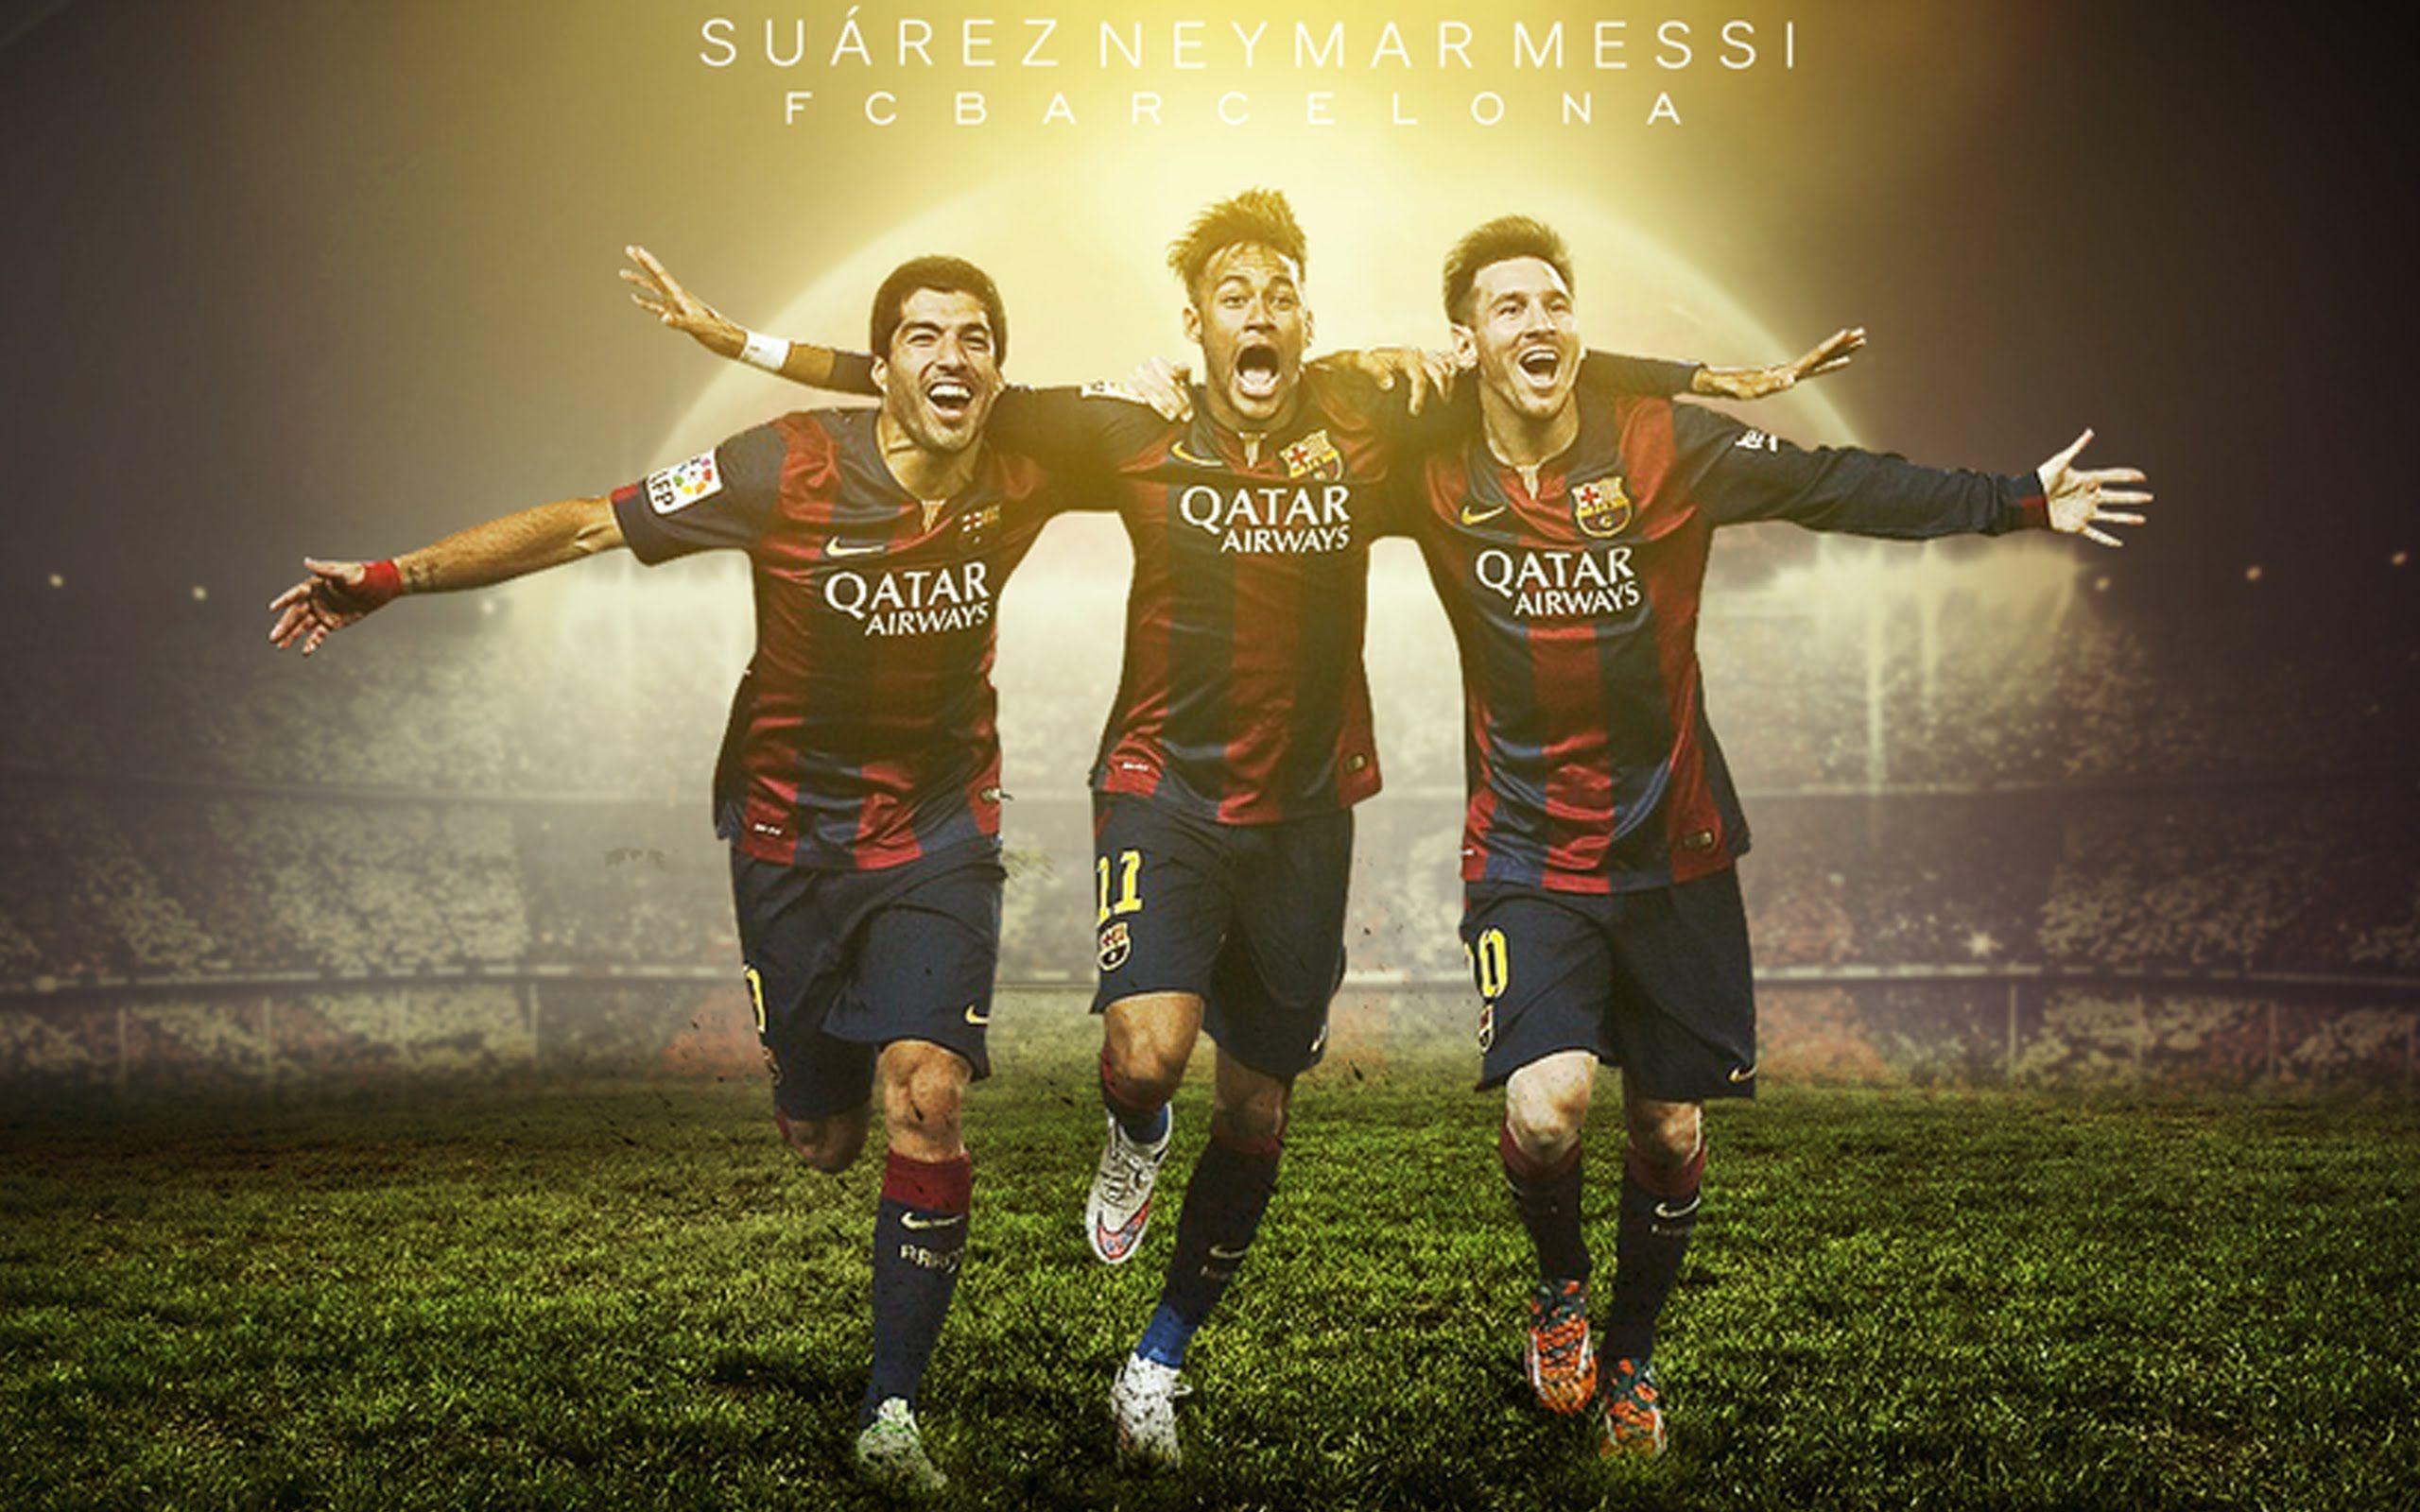 FC Barcelona 2015 Neymar Messi Suarez wallpaper. fc barcelona